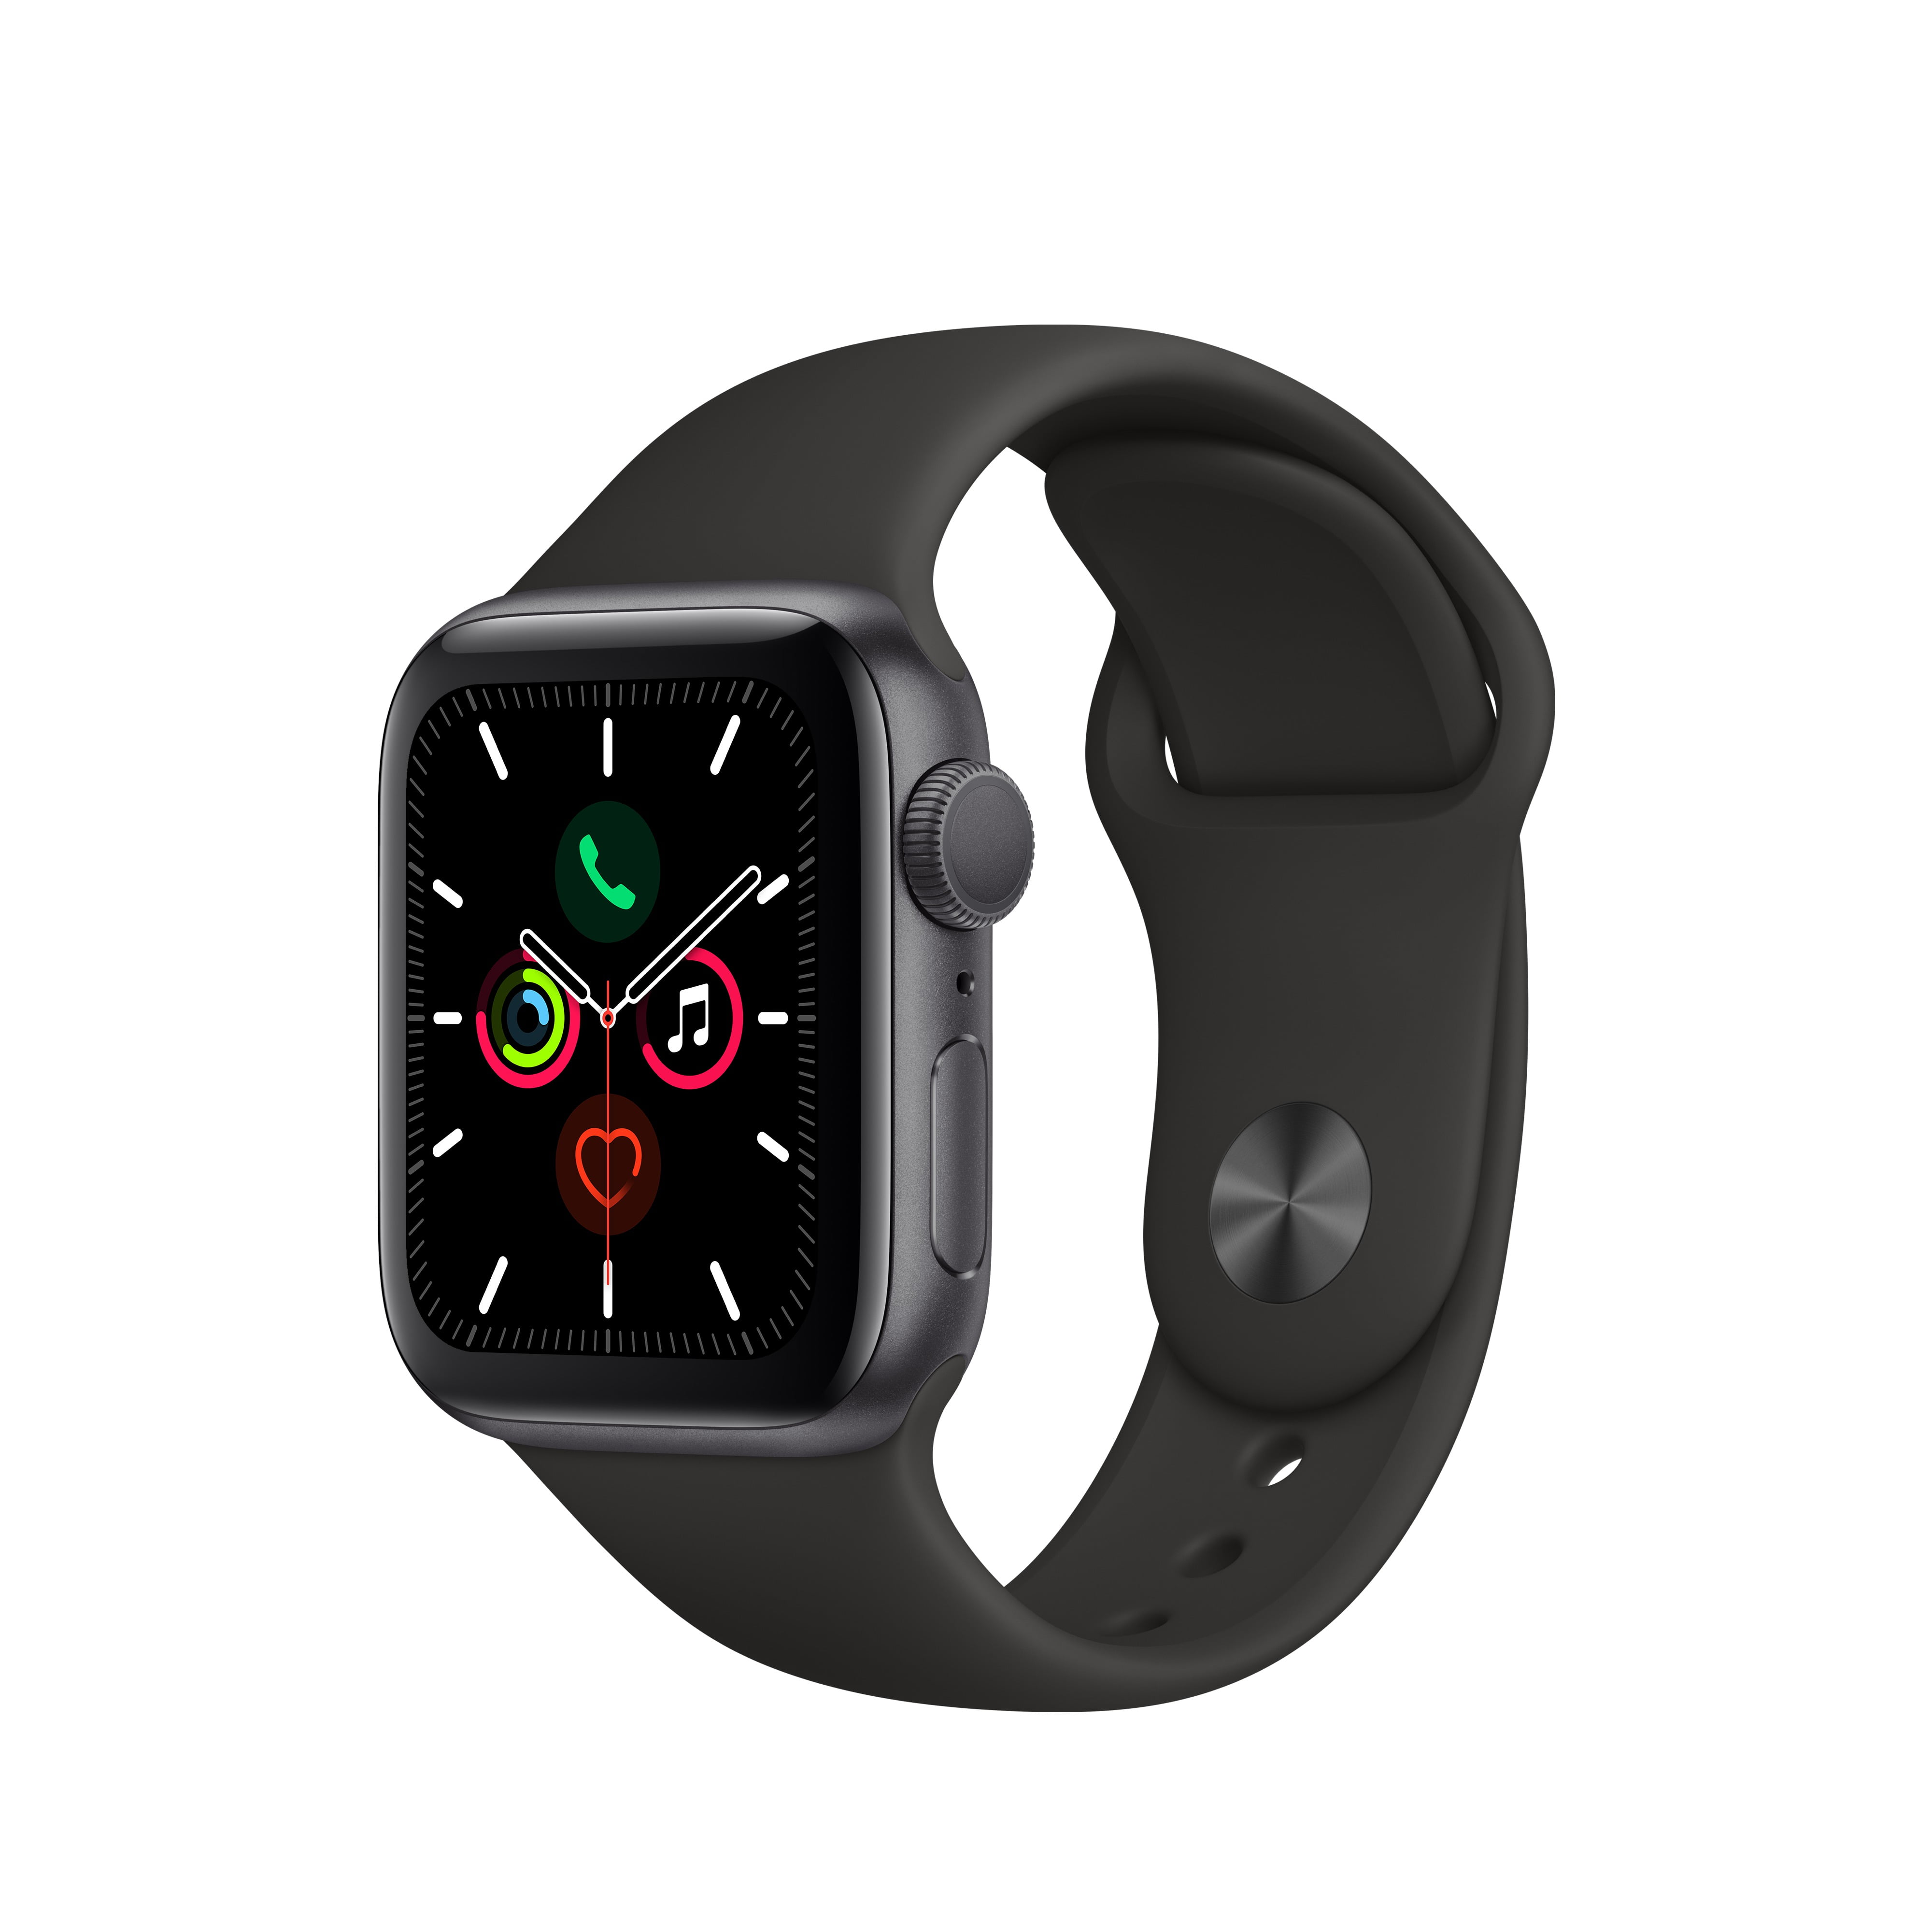 Kilometers fragment Gehoorzaam Apple Watch Series 5 (GPS, 40mm) - Space Gray Aluminum Case with Black  Sport Band - Walmart.com